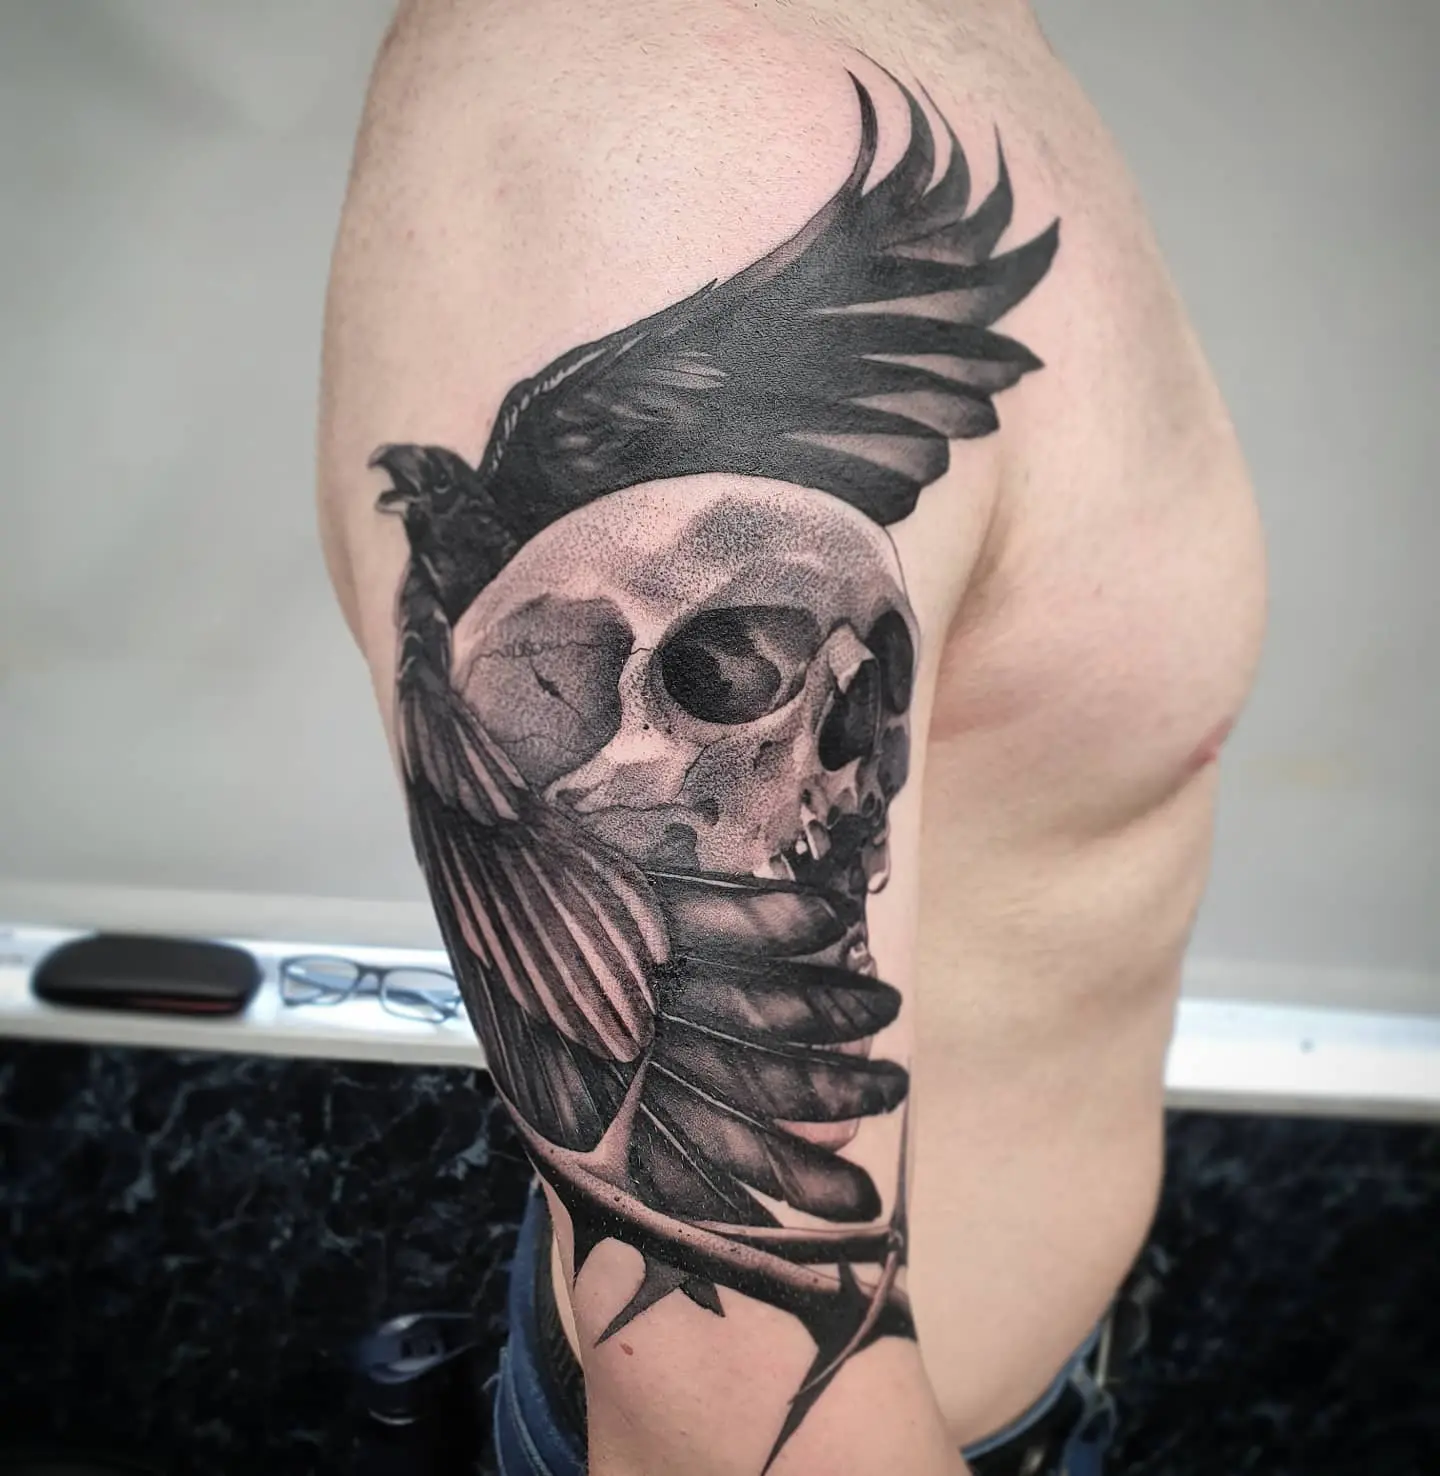 Skull sleeve tattoo// my husbands arm, by abdiel | Skull sleeve tattoos, Sleeve  tattoos, Skull sleeve